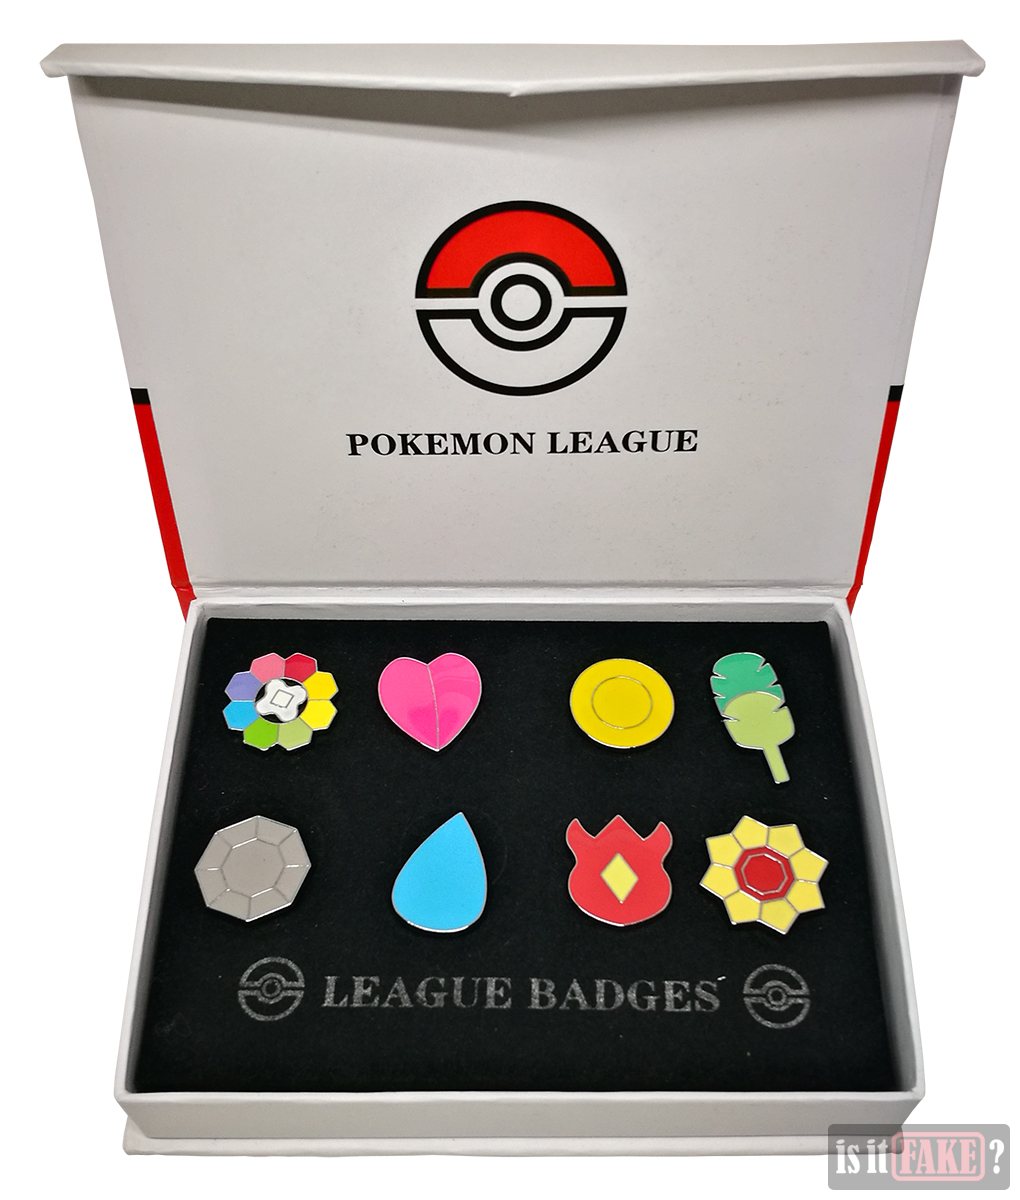 Fake Pokemon badge set box opened to reveal badges fastened to cardboard insert